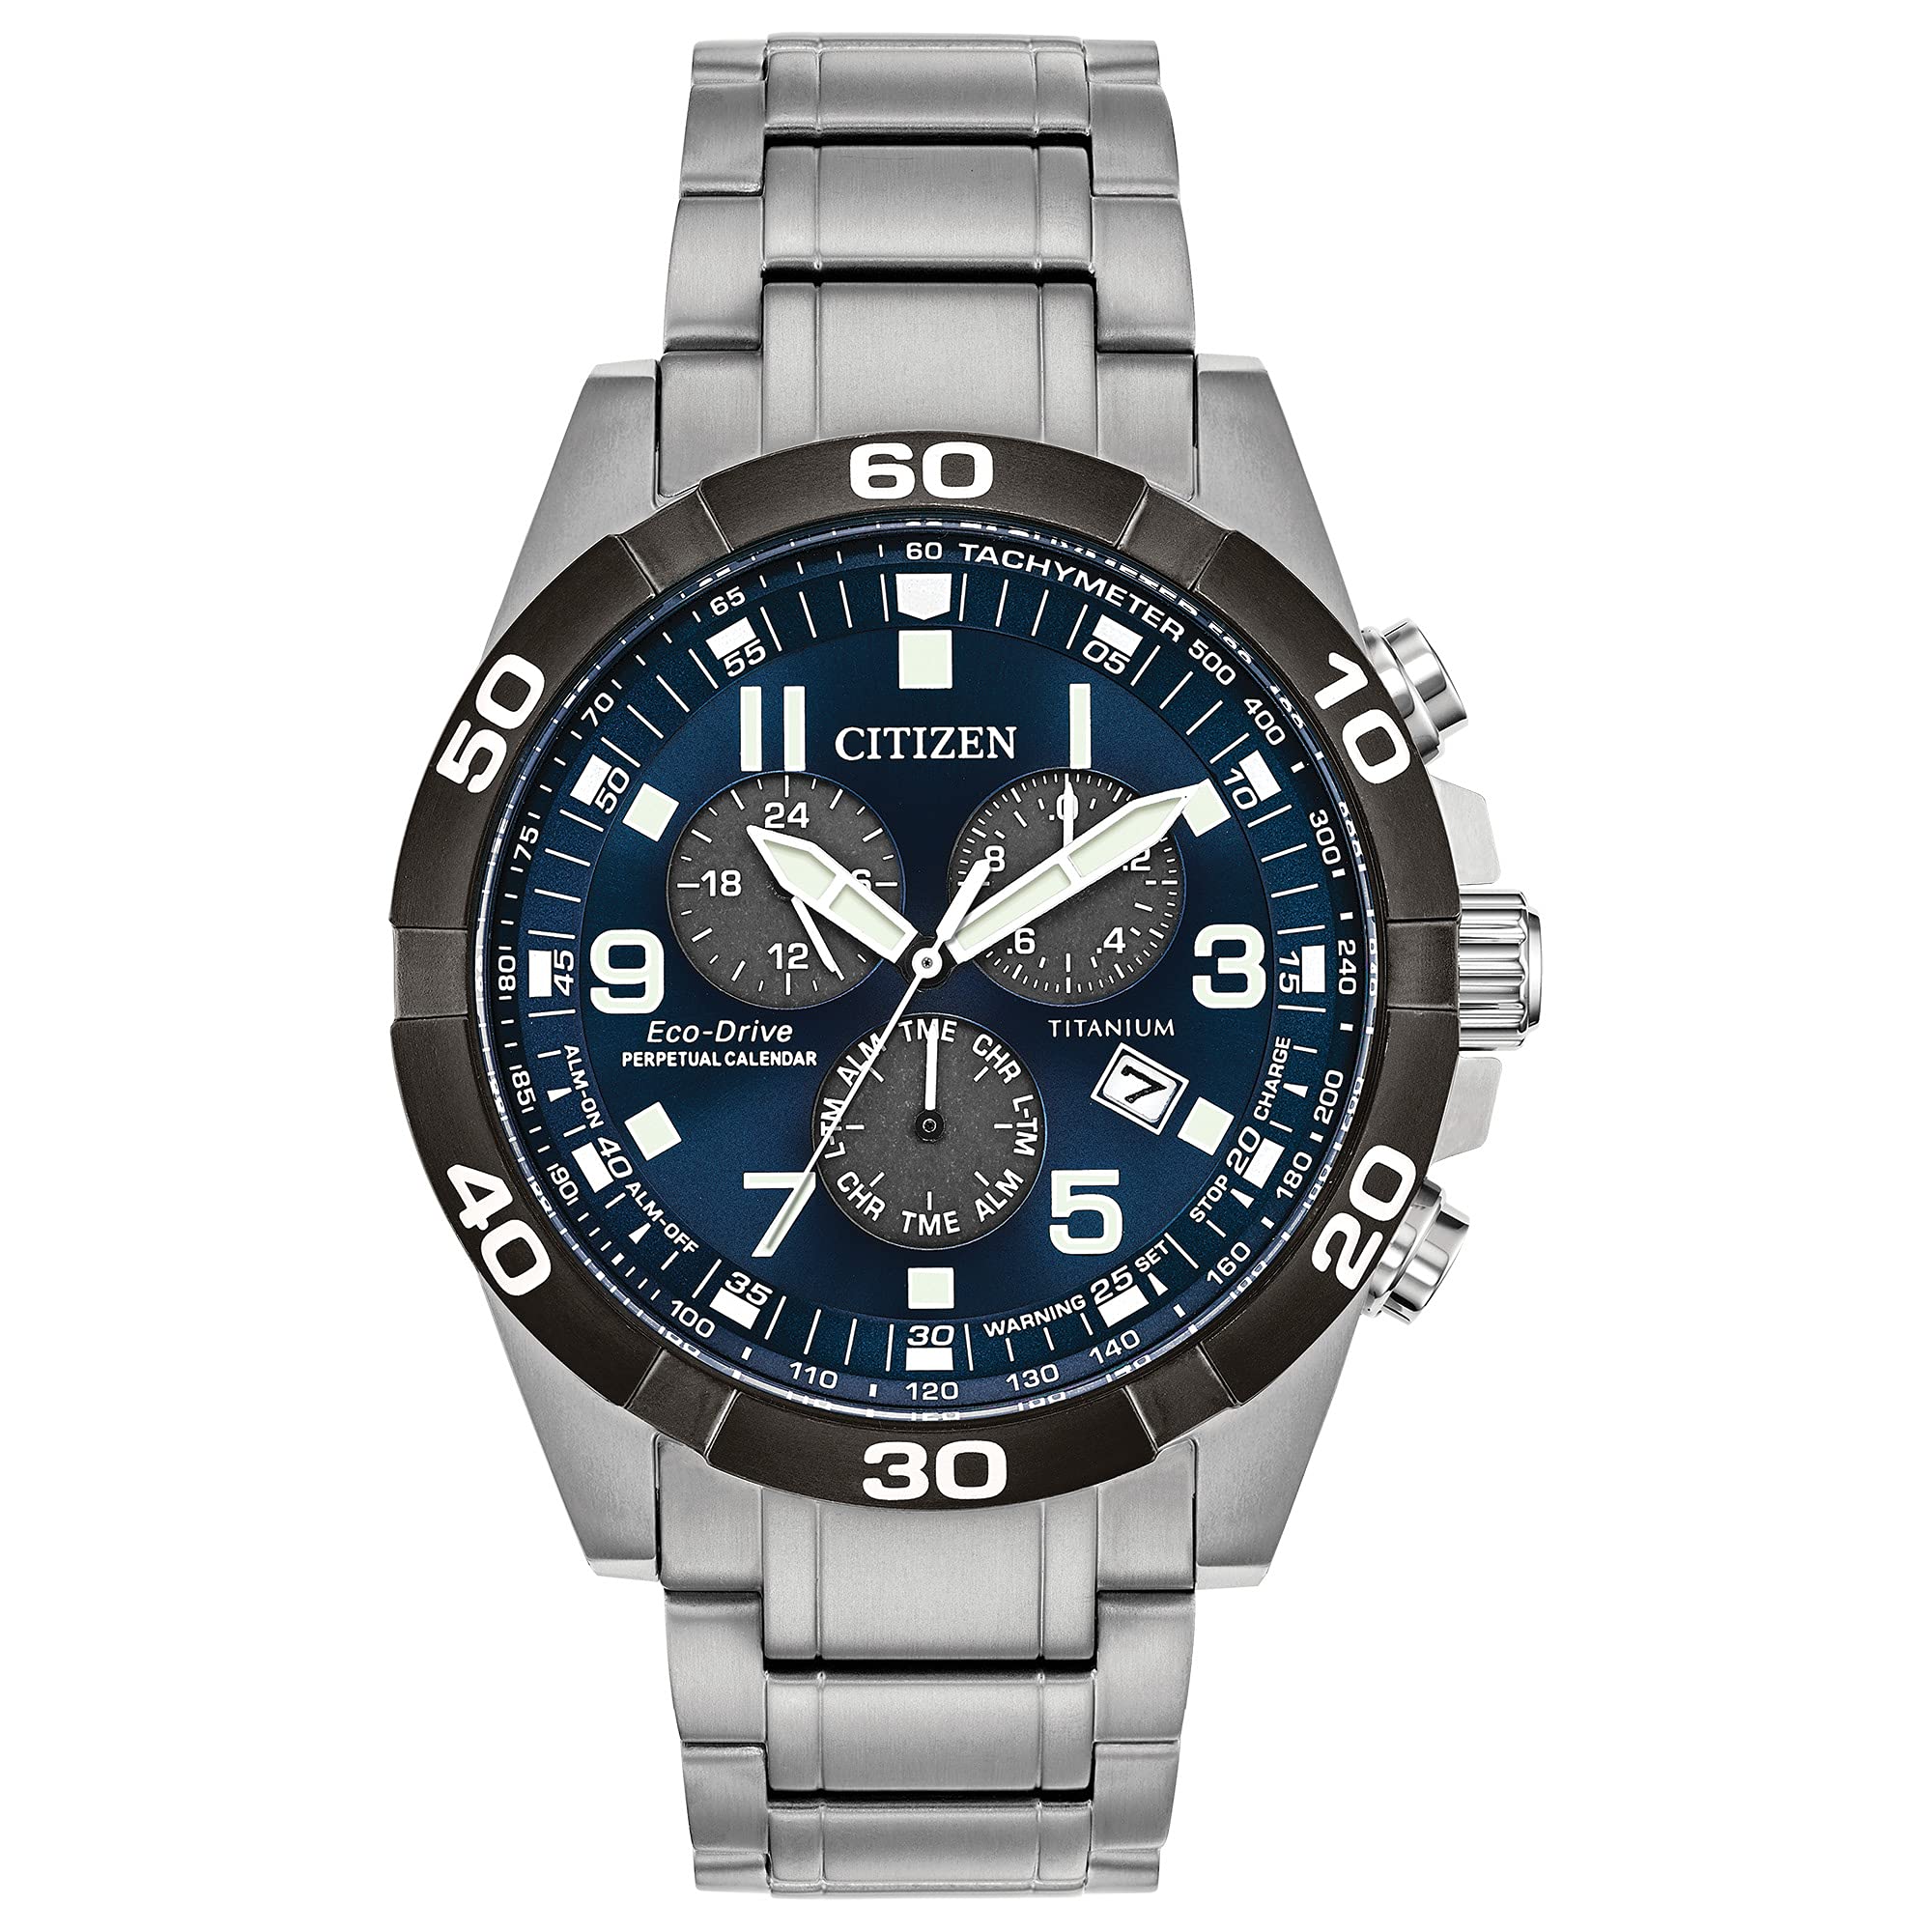 Citizen Men's Eco-Drive Sport Casual Brycen Chronograph Watch, Super Titanium™, Perpetual Calendar, Tachymeter 12/24 Hour Time, Alarm, Date